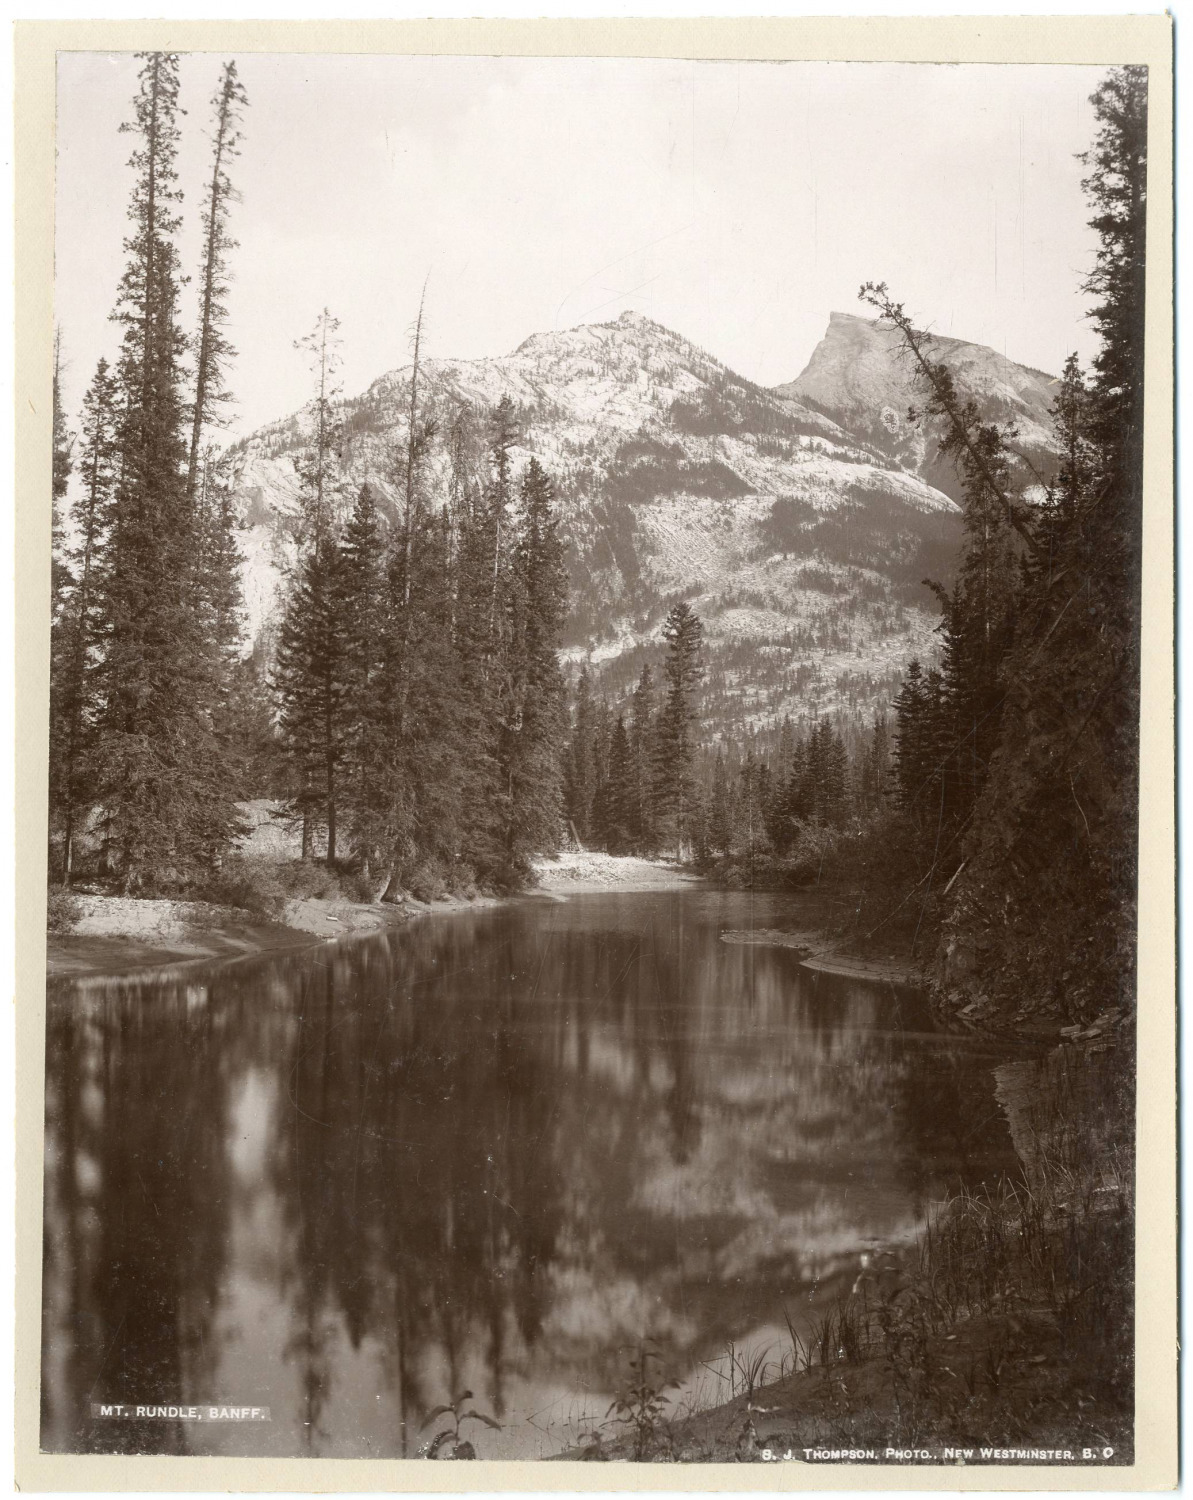 J.Thompson, Banff National Park is in Alberta, Mt Rundle, Canada Vintage Print,